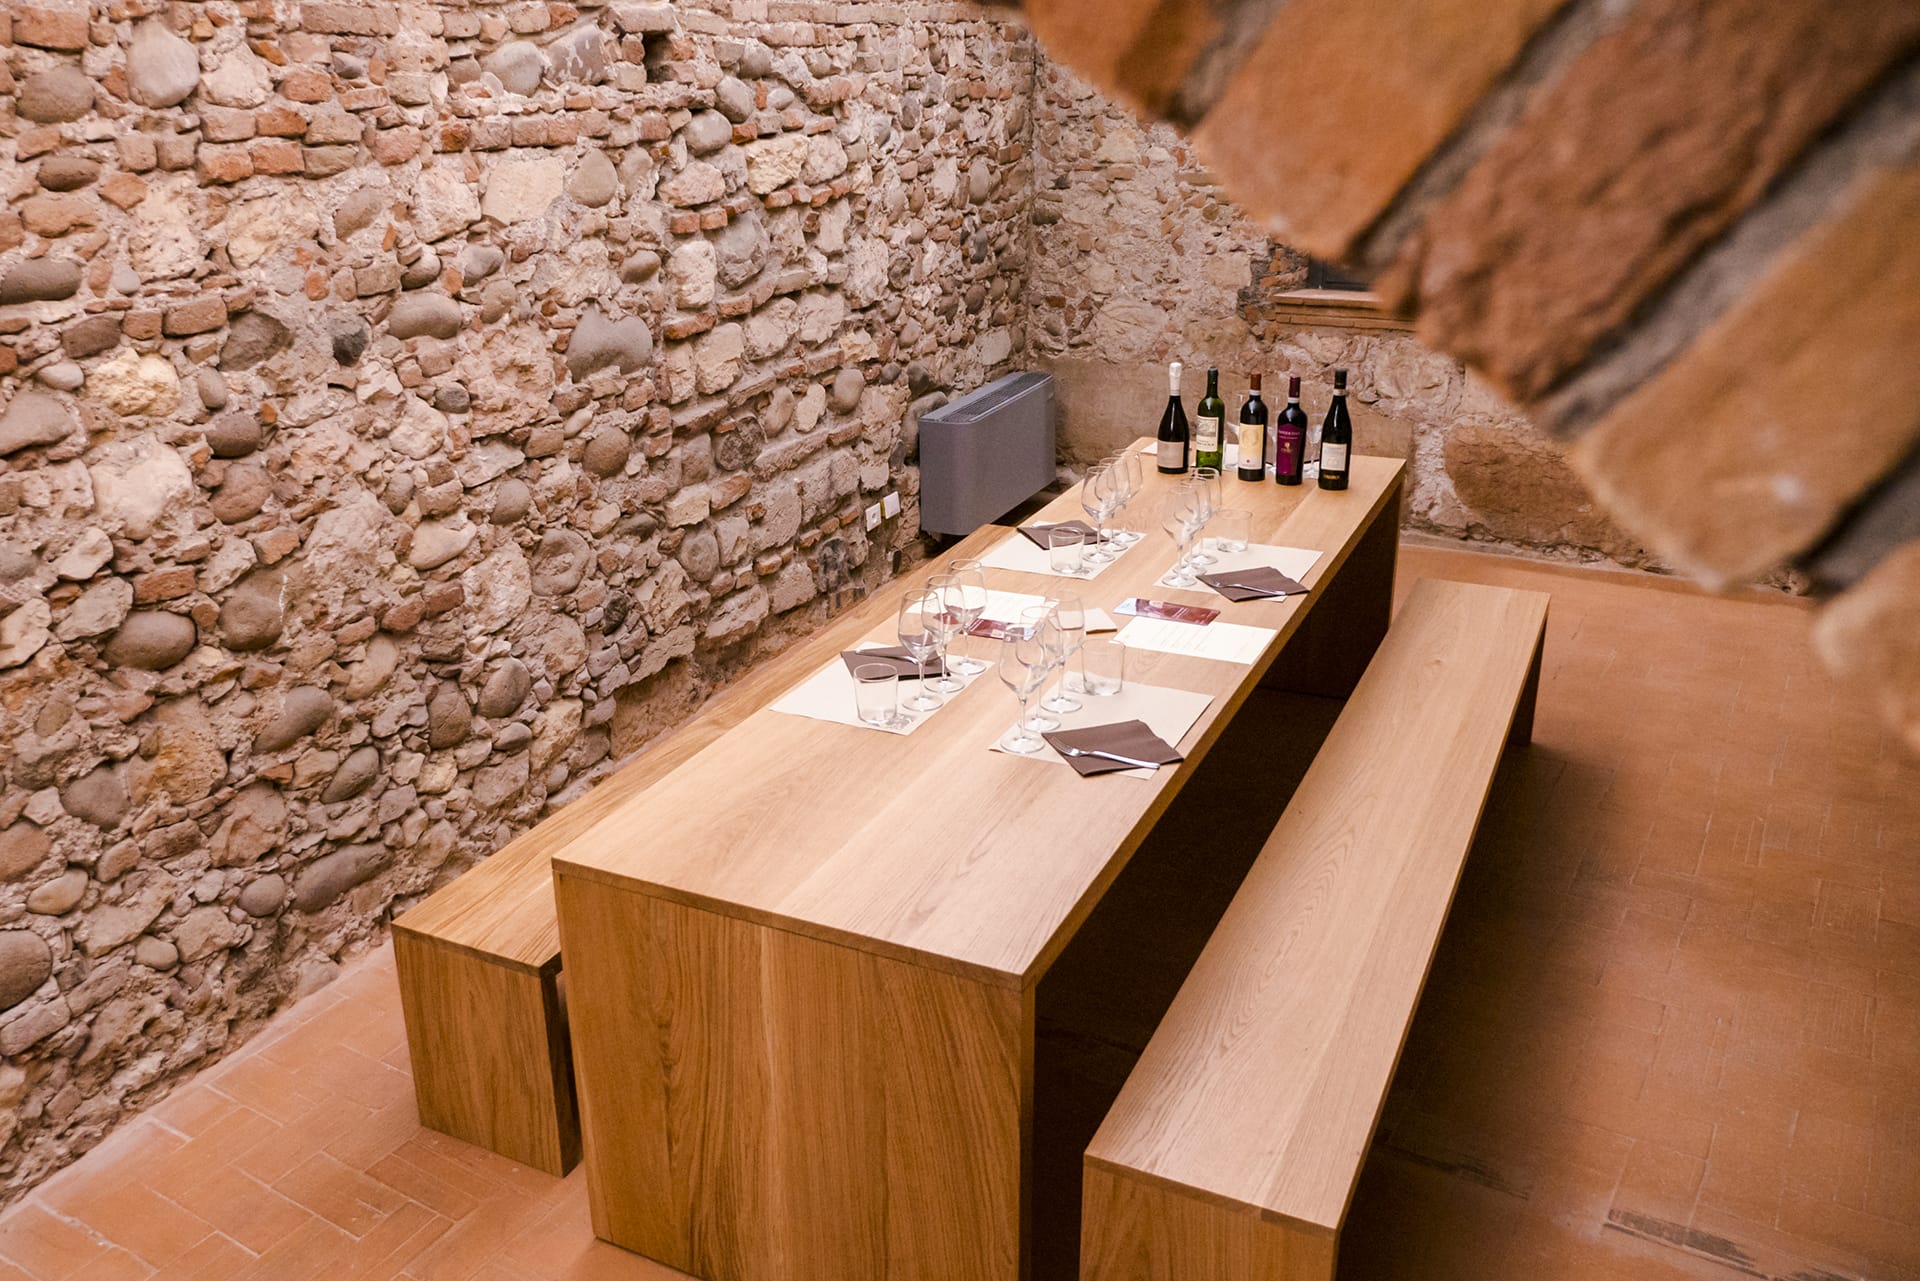 Tasting room in Verona